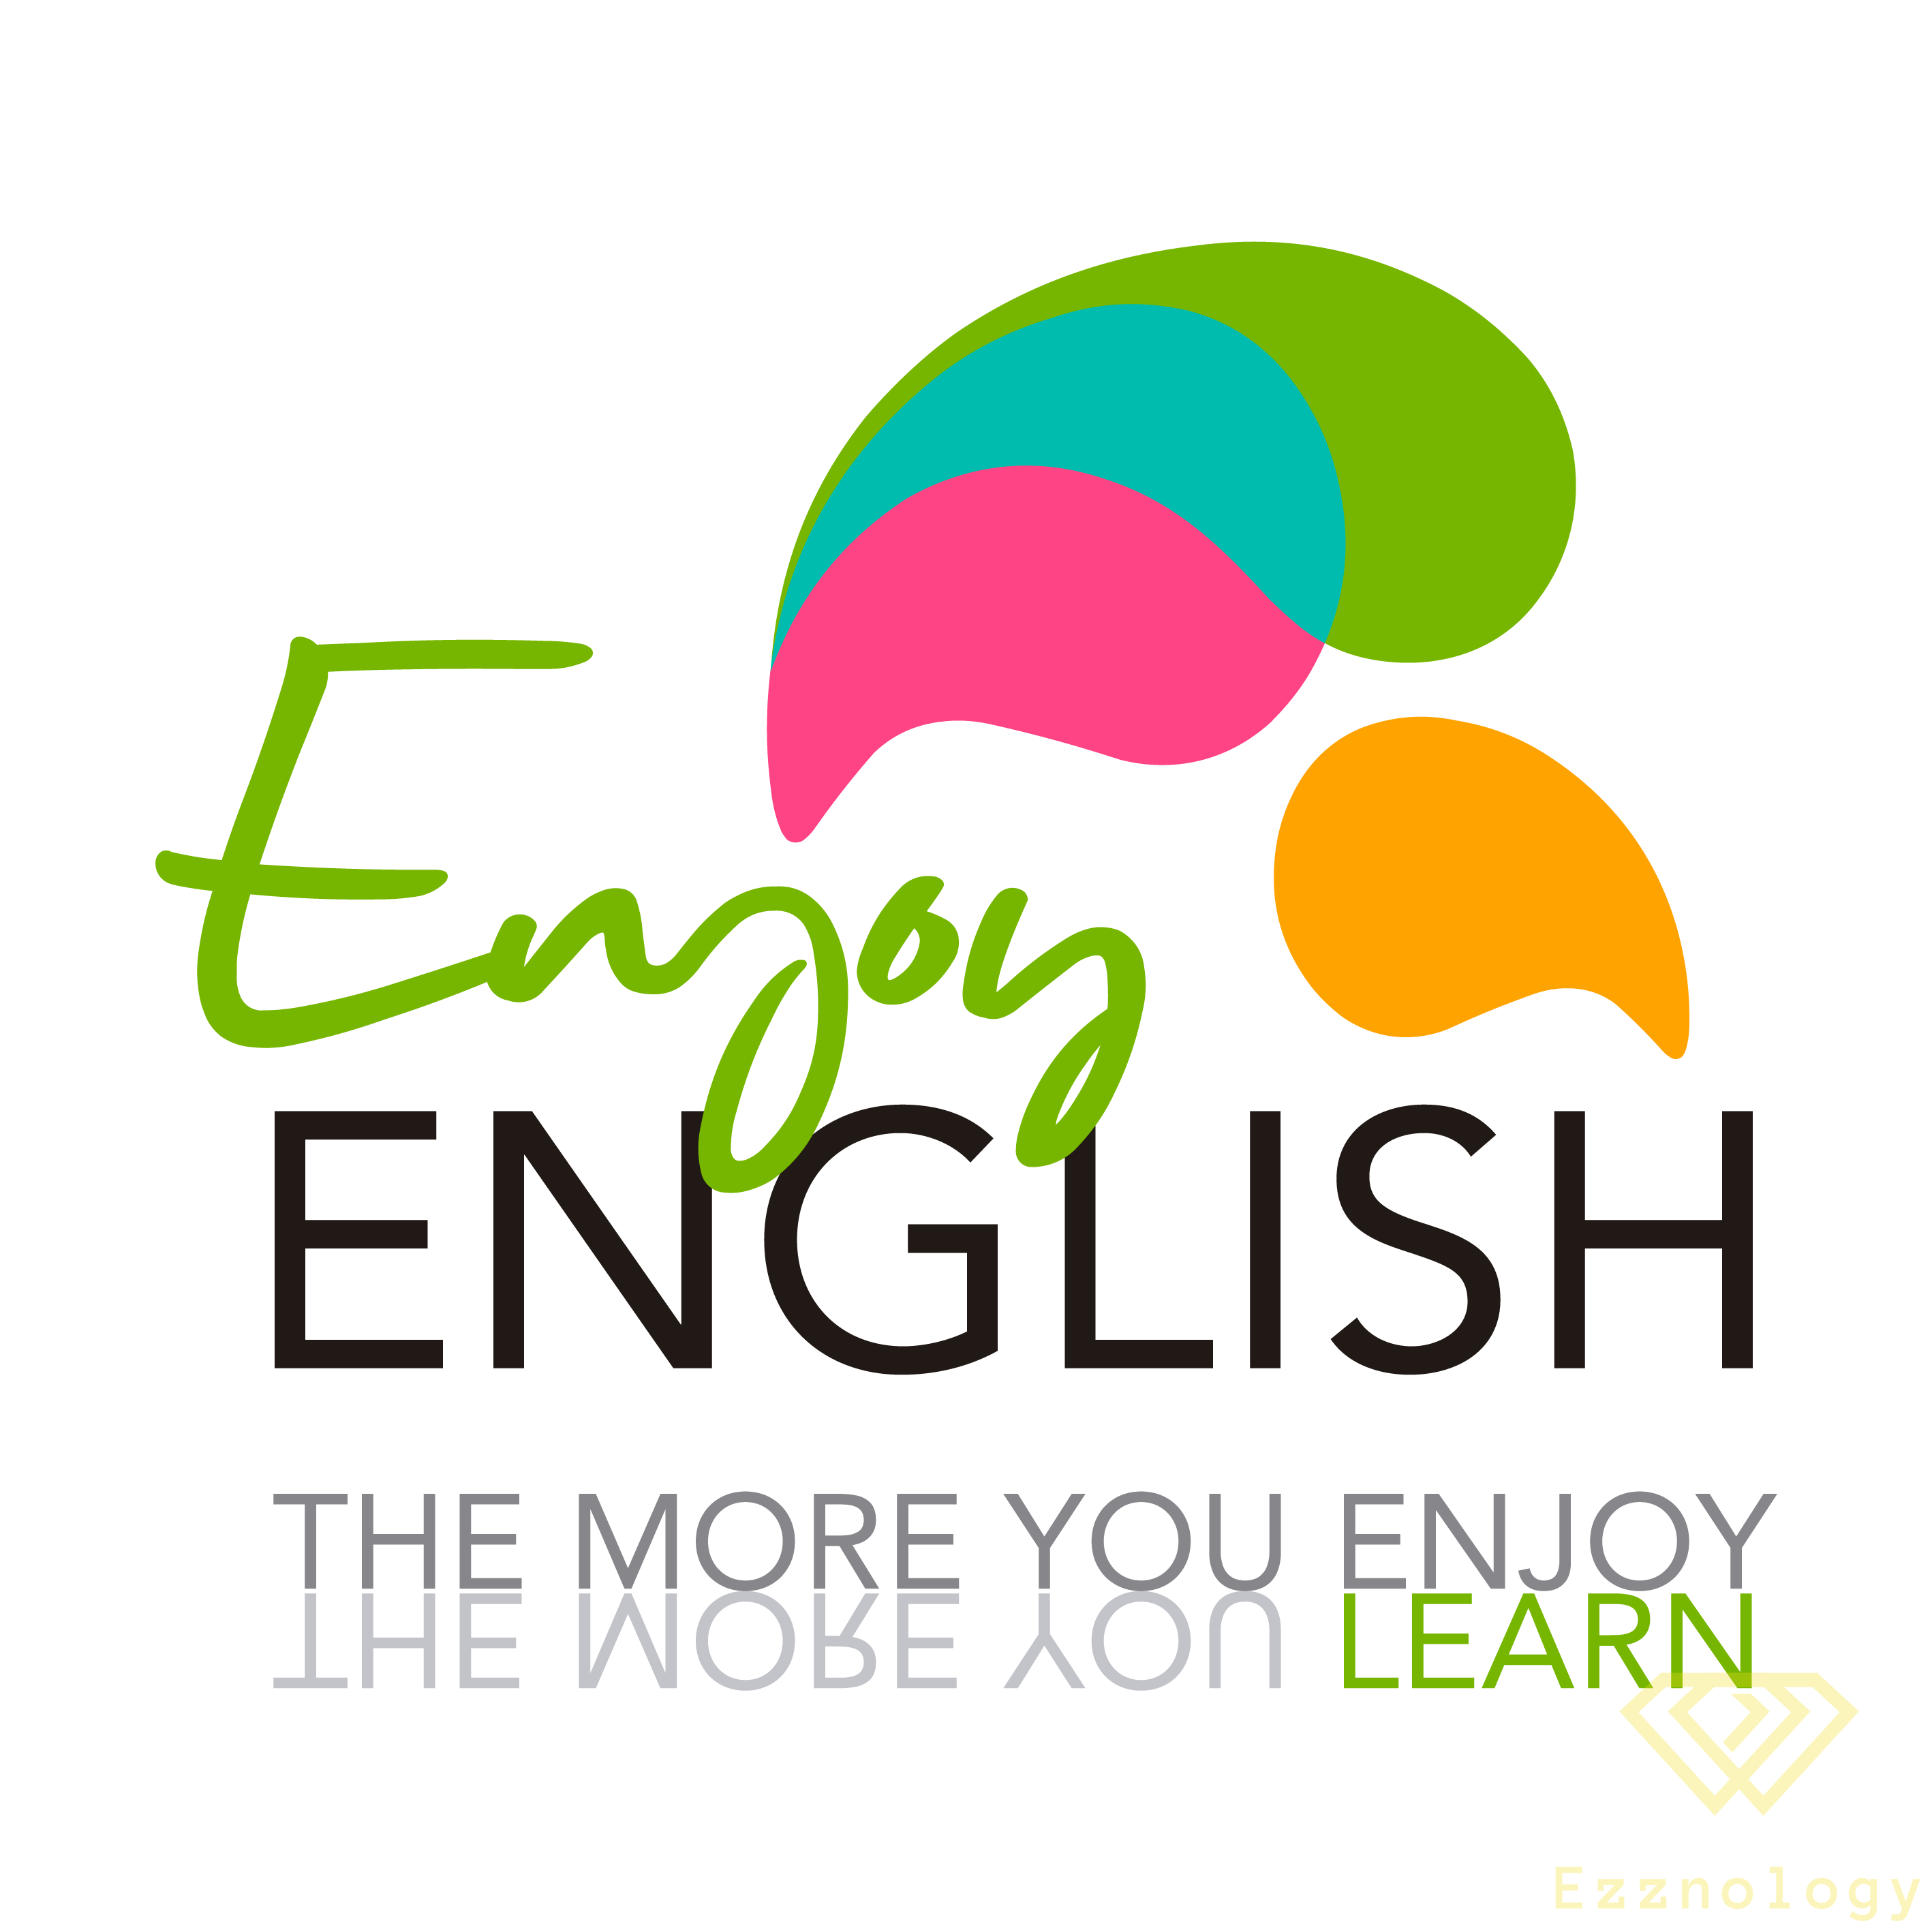 enjoy english 2